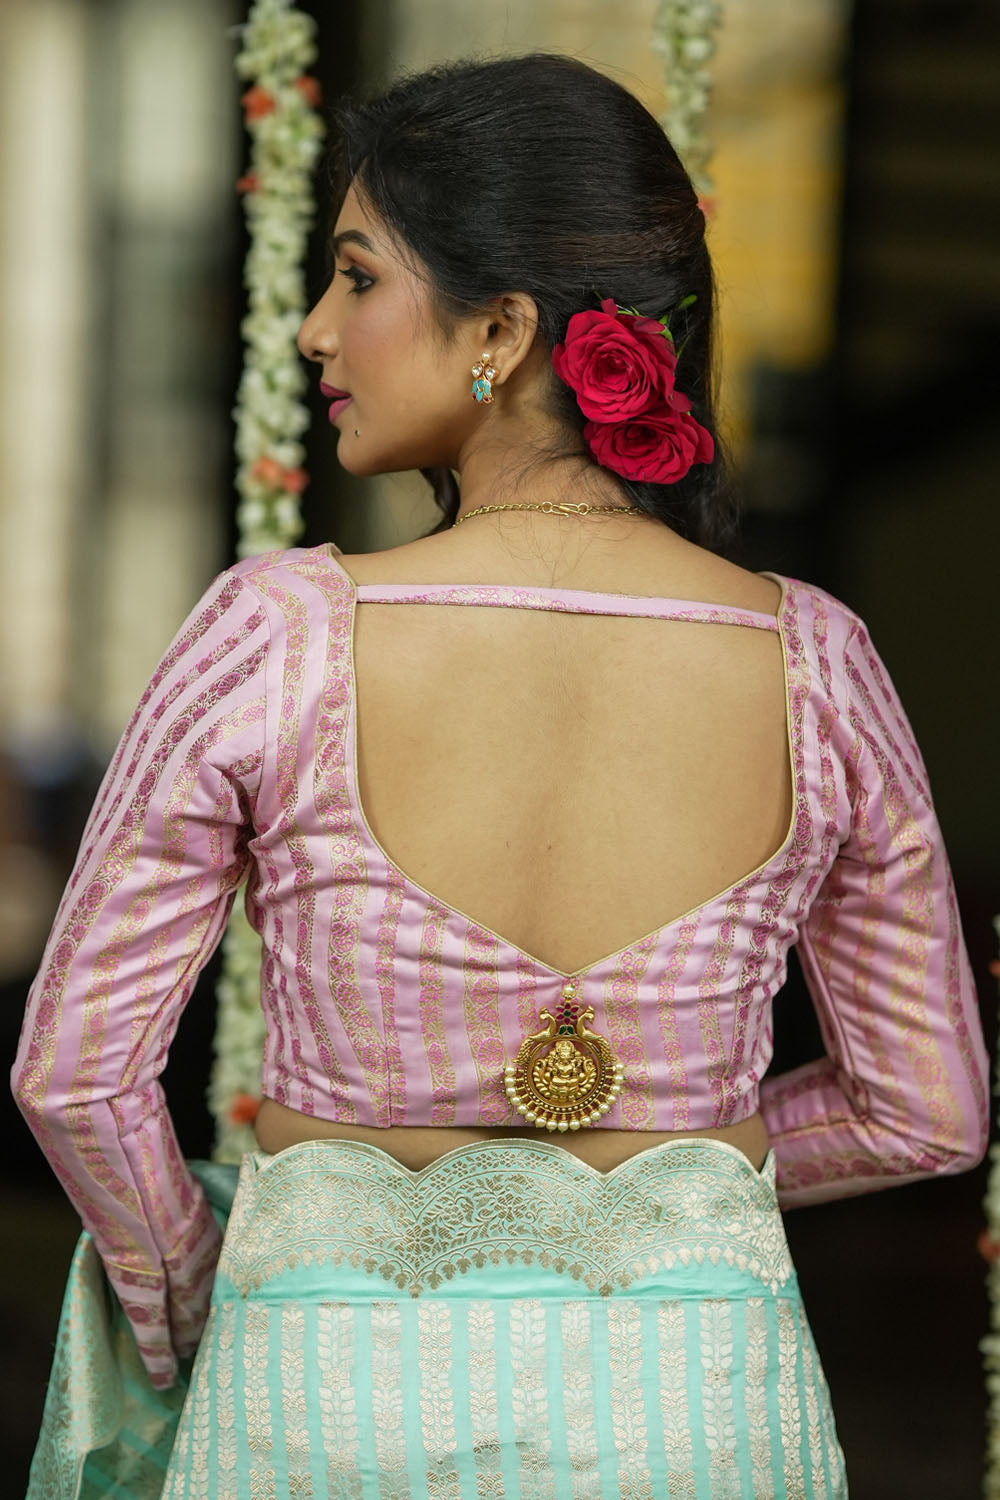 Thistle banarasi brocade  plunge neck full sleeves blouse with goddess trinket detailing